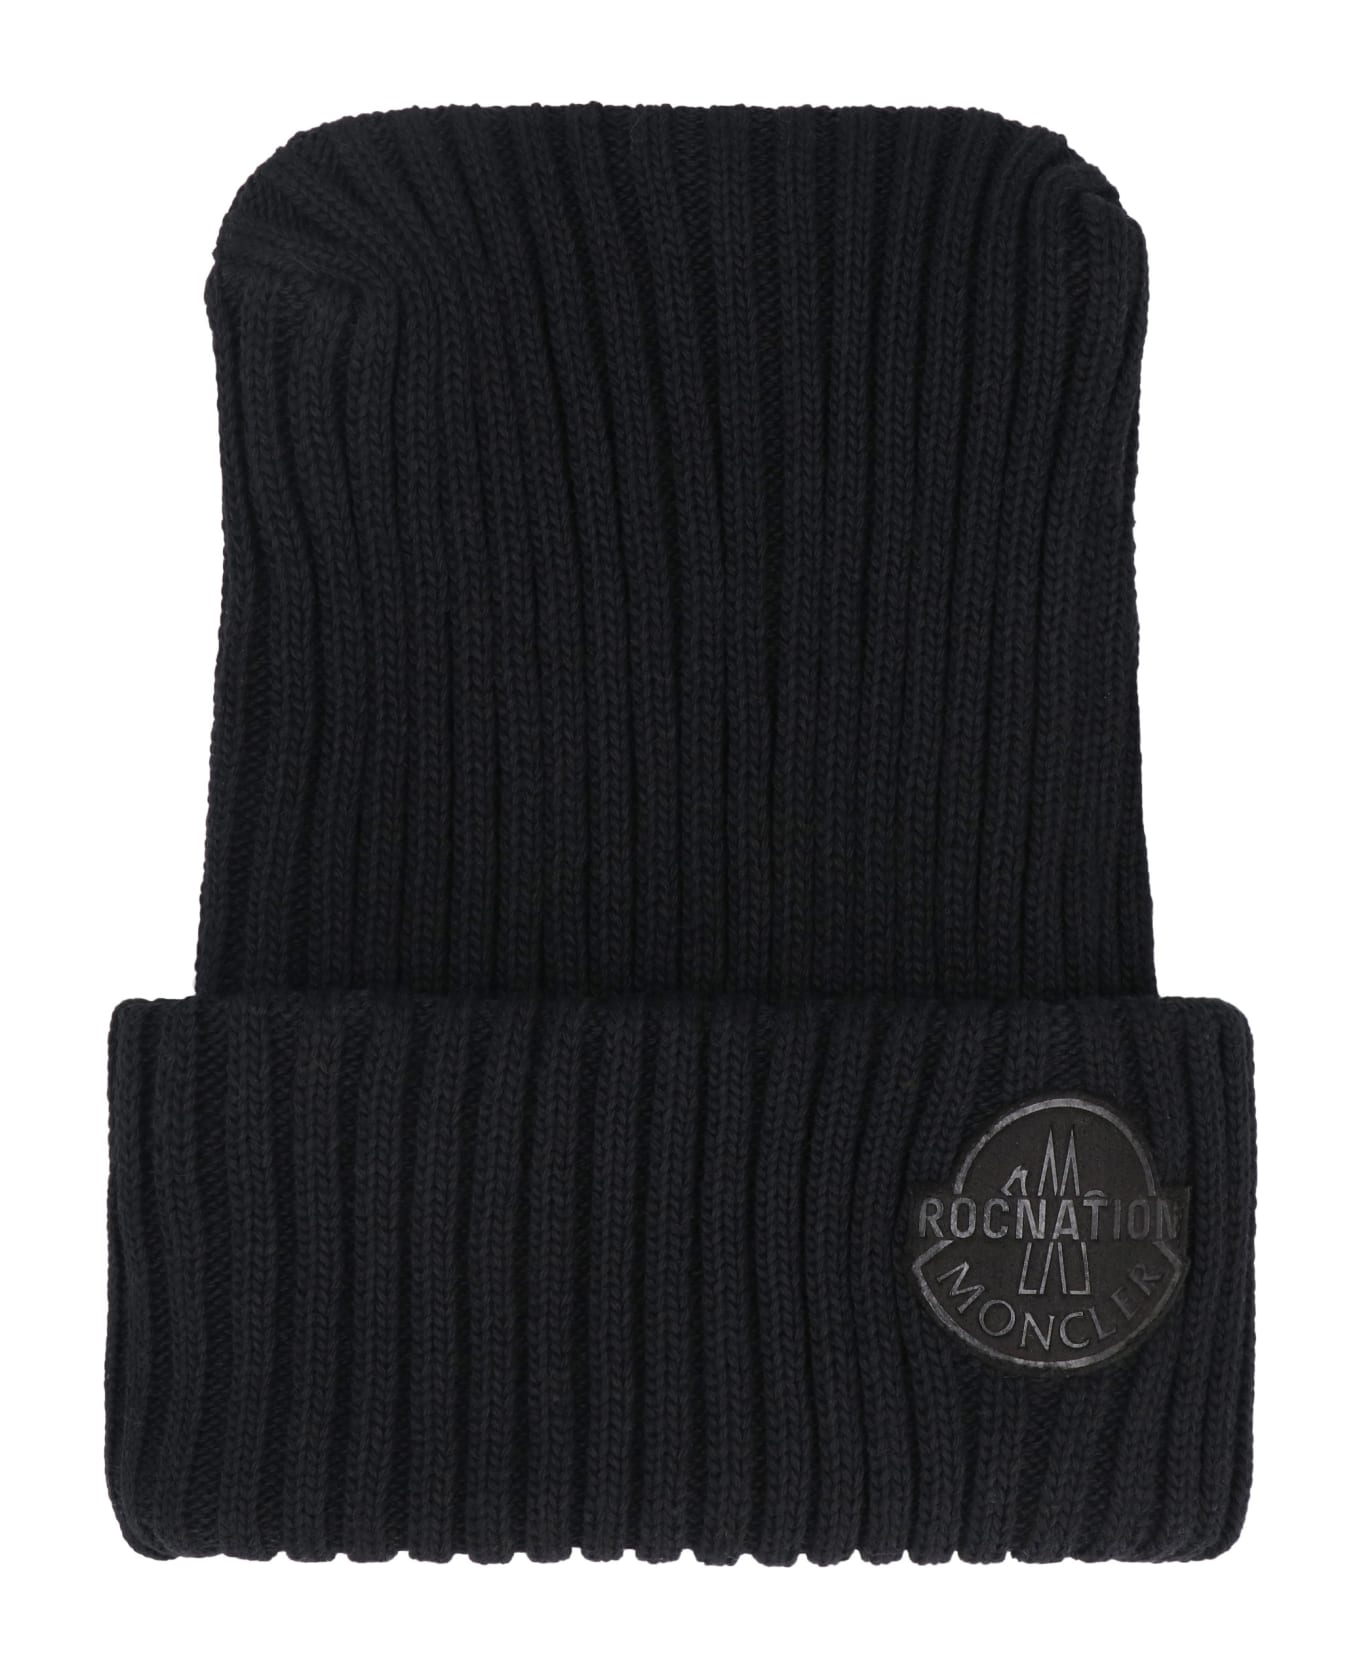 Moncler Genius Moncler X Roc Nation Designed By Jay-z - Wool Hat - BLACK 帽子